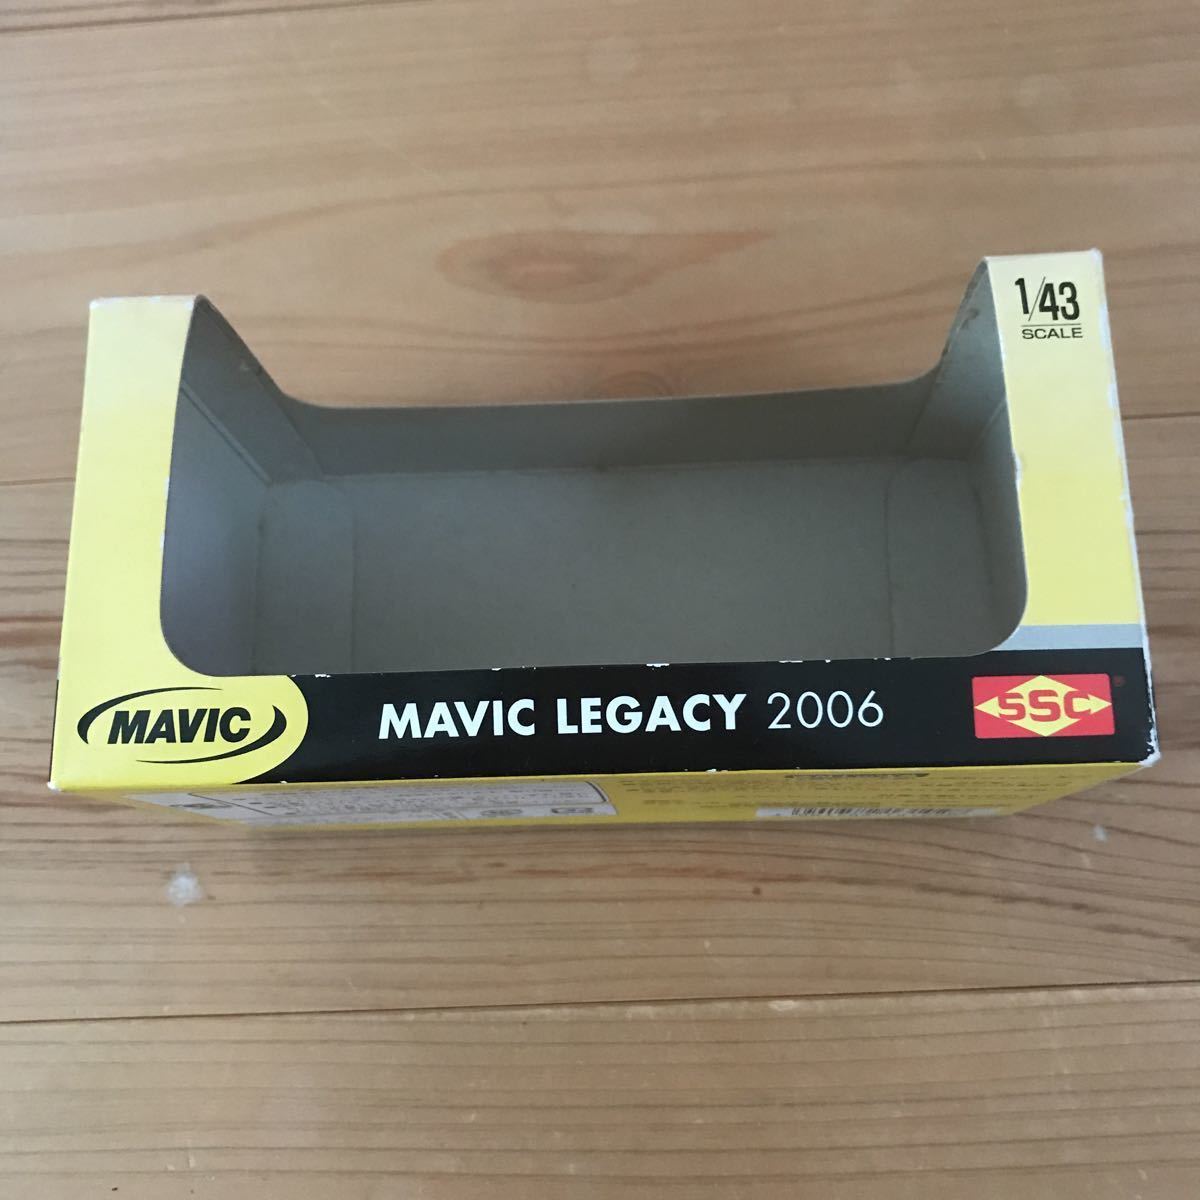 MAVIC LEGACY 1996-2006 neutral support car Legacy Touring Wagon Epo k company 1/43